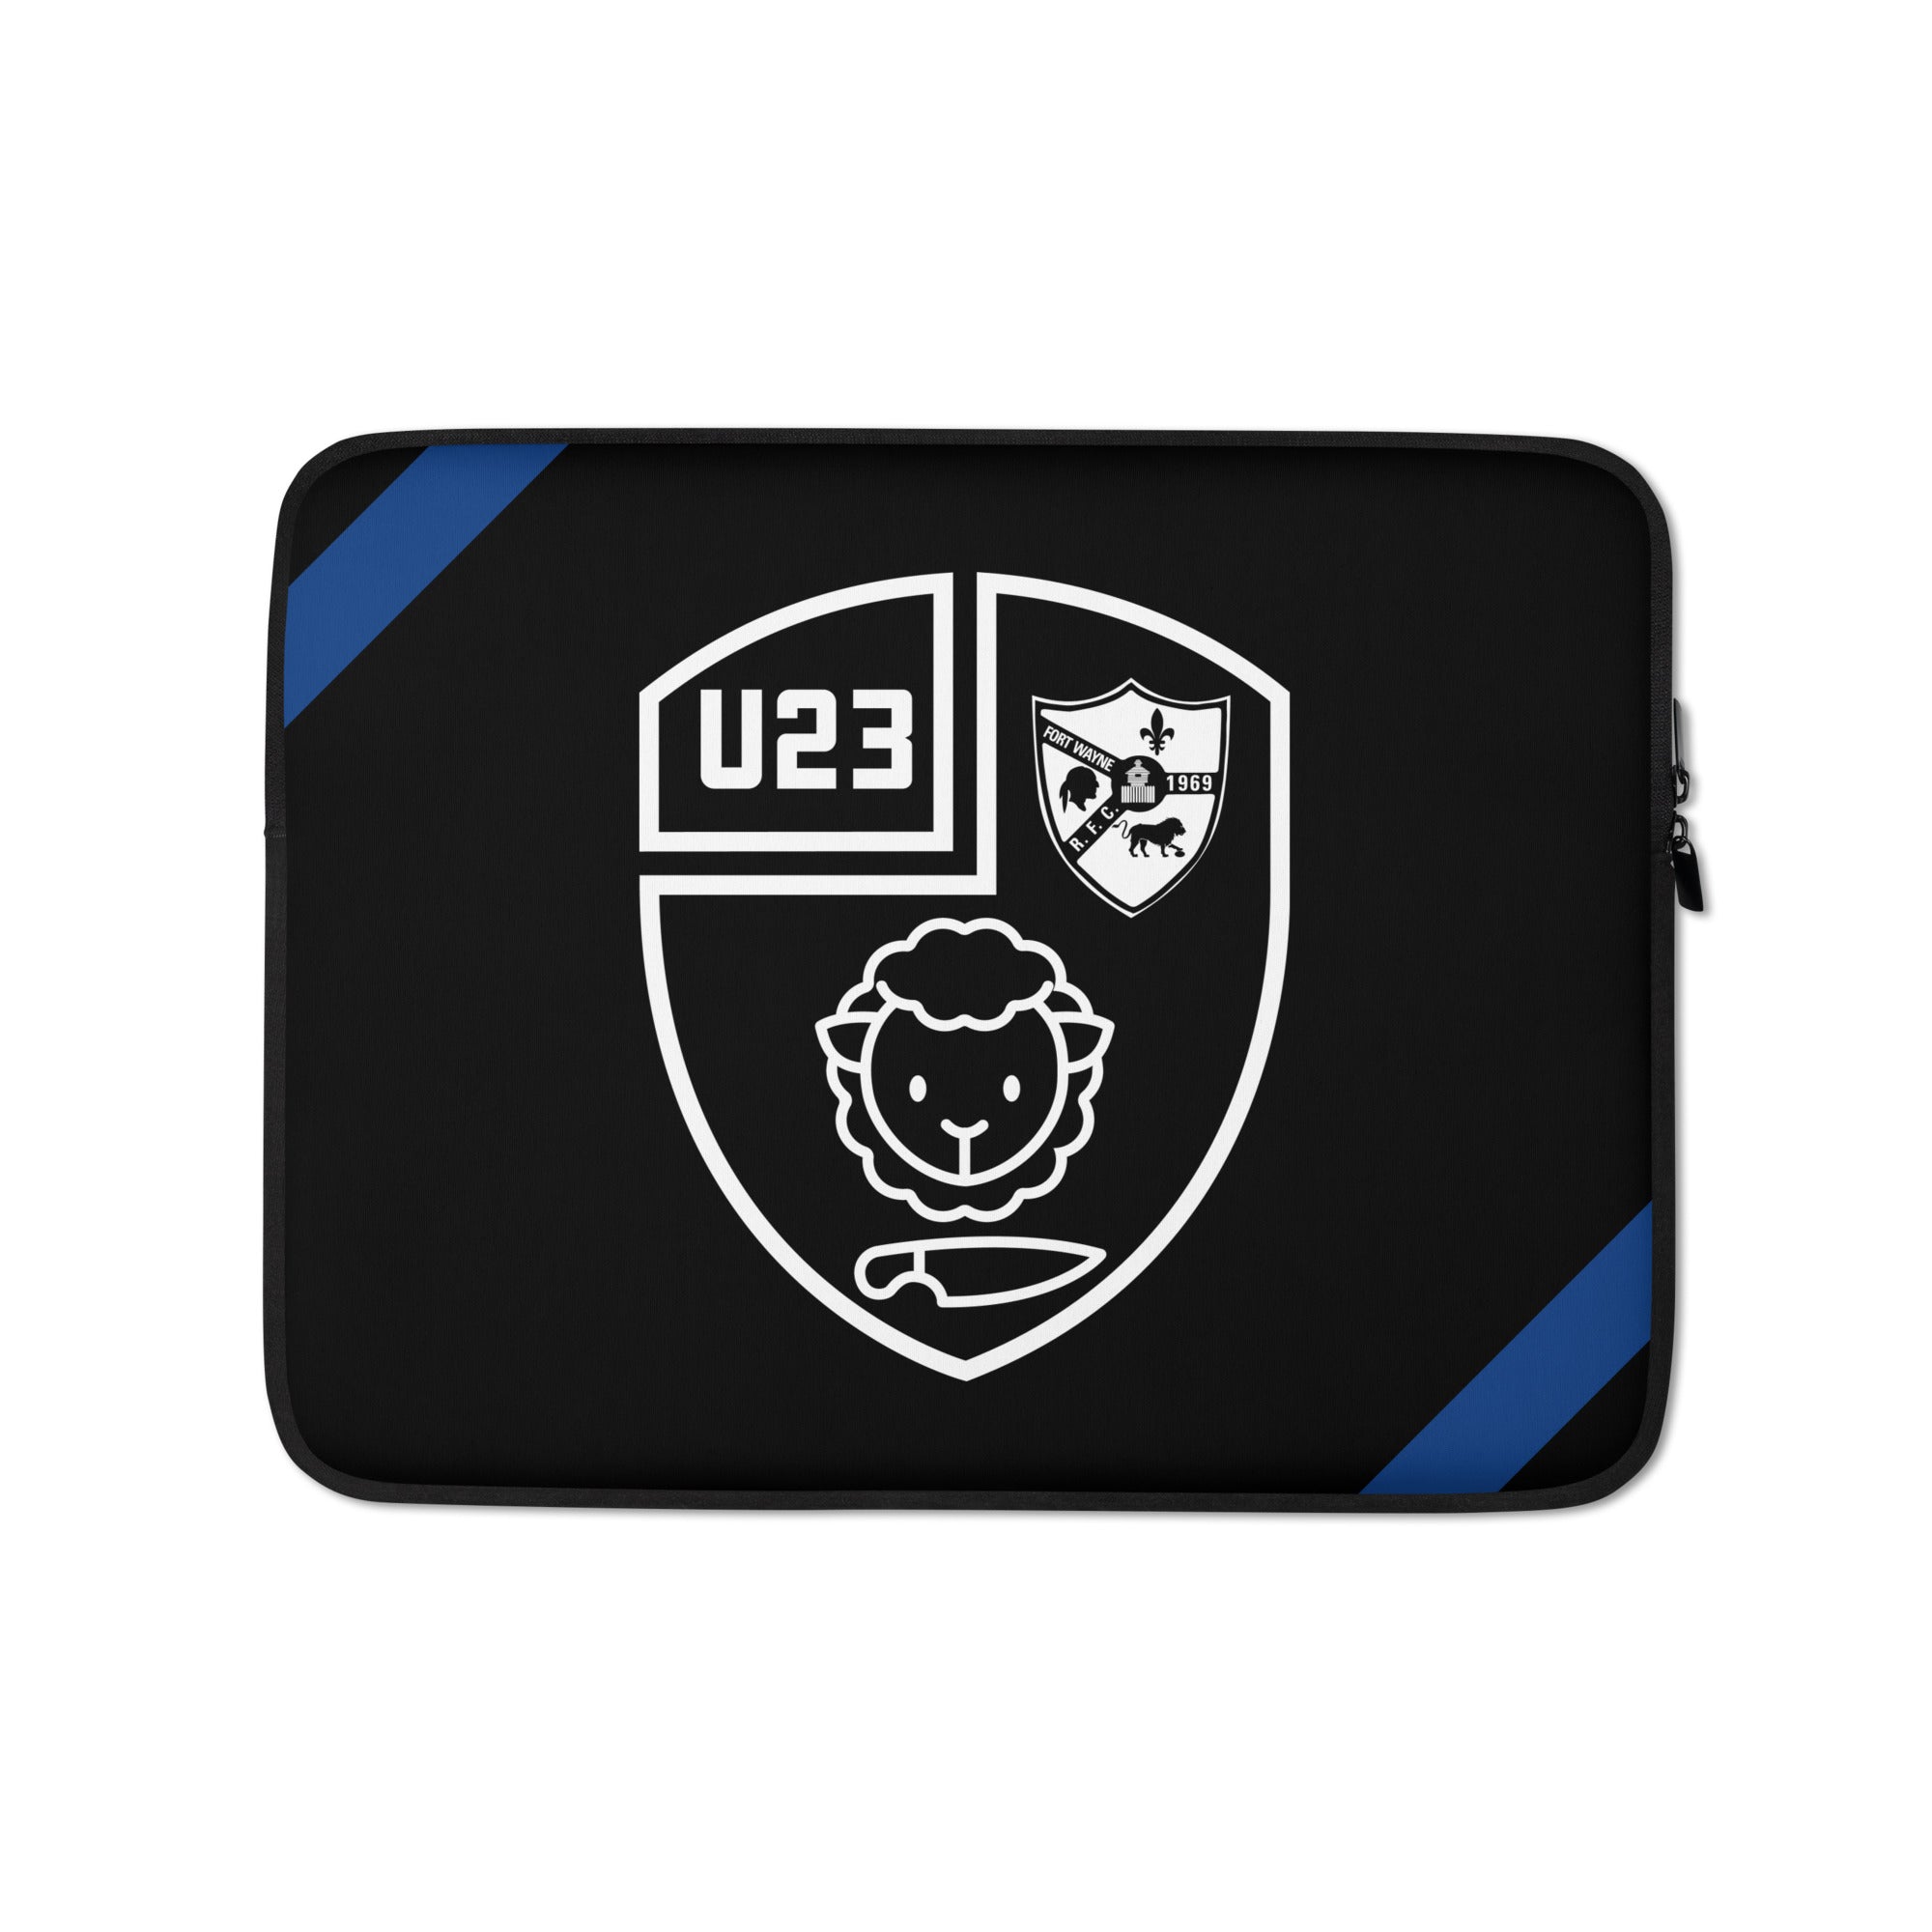 Rugby Imports Black & Blue U23 Laptop Sleeve